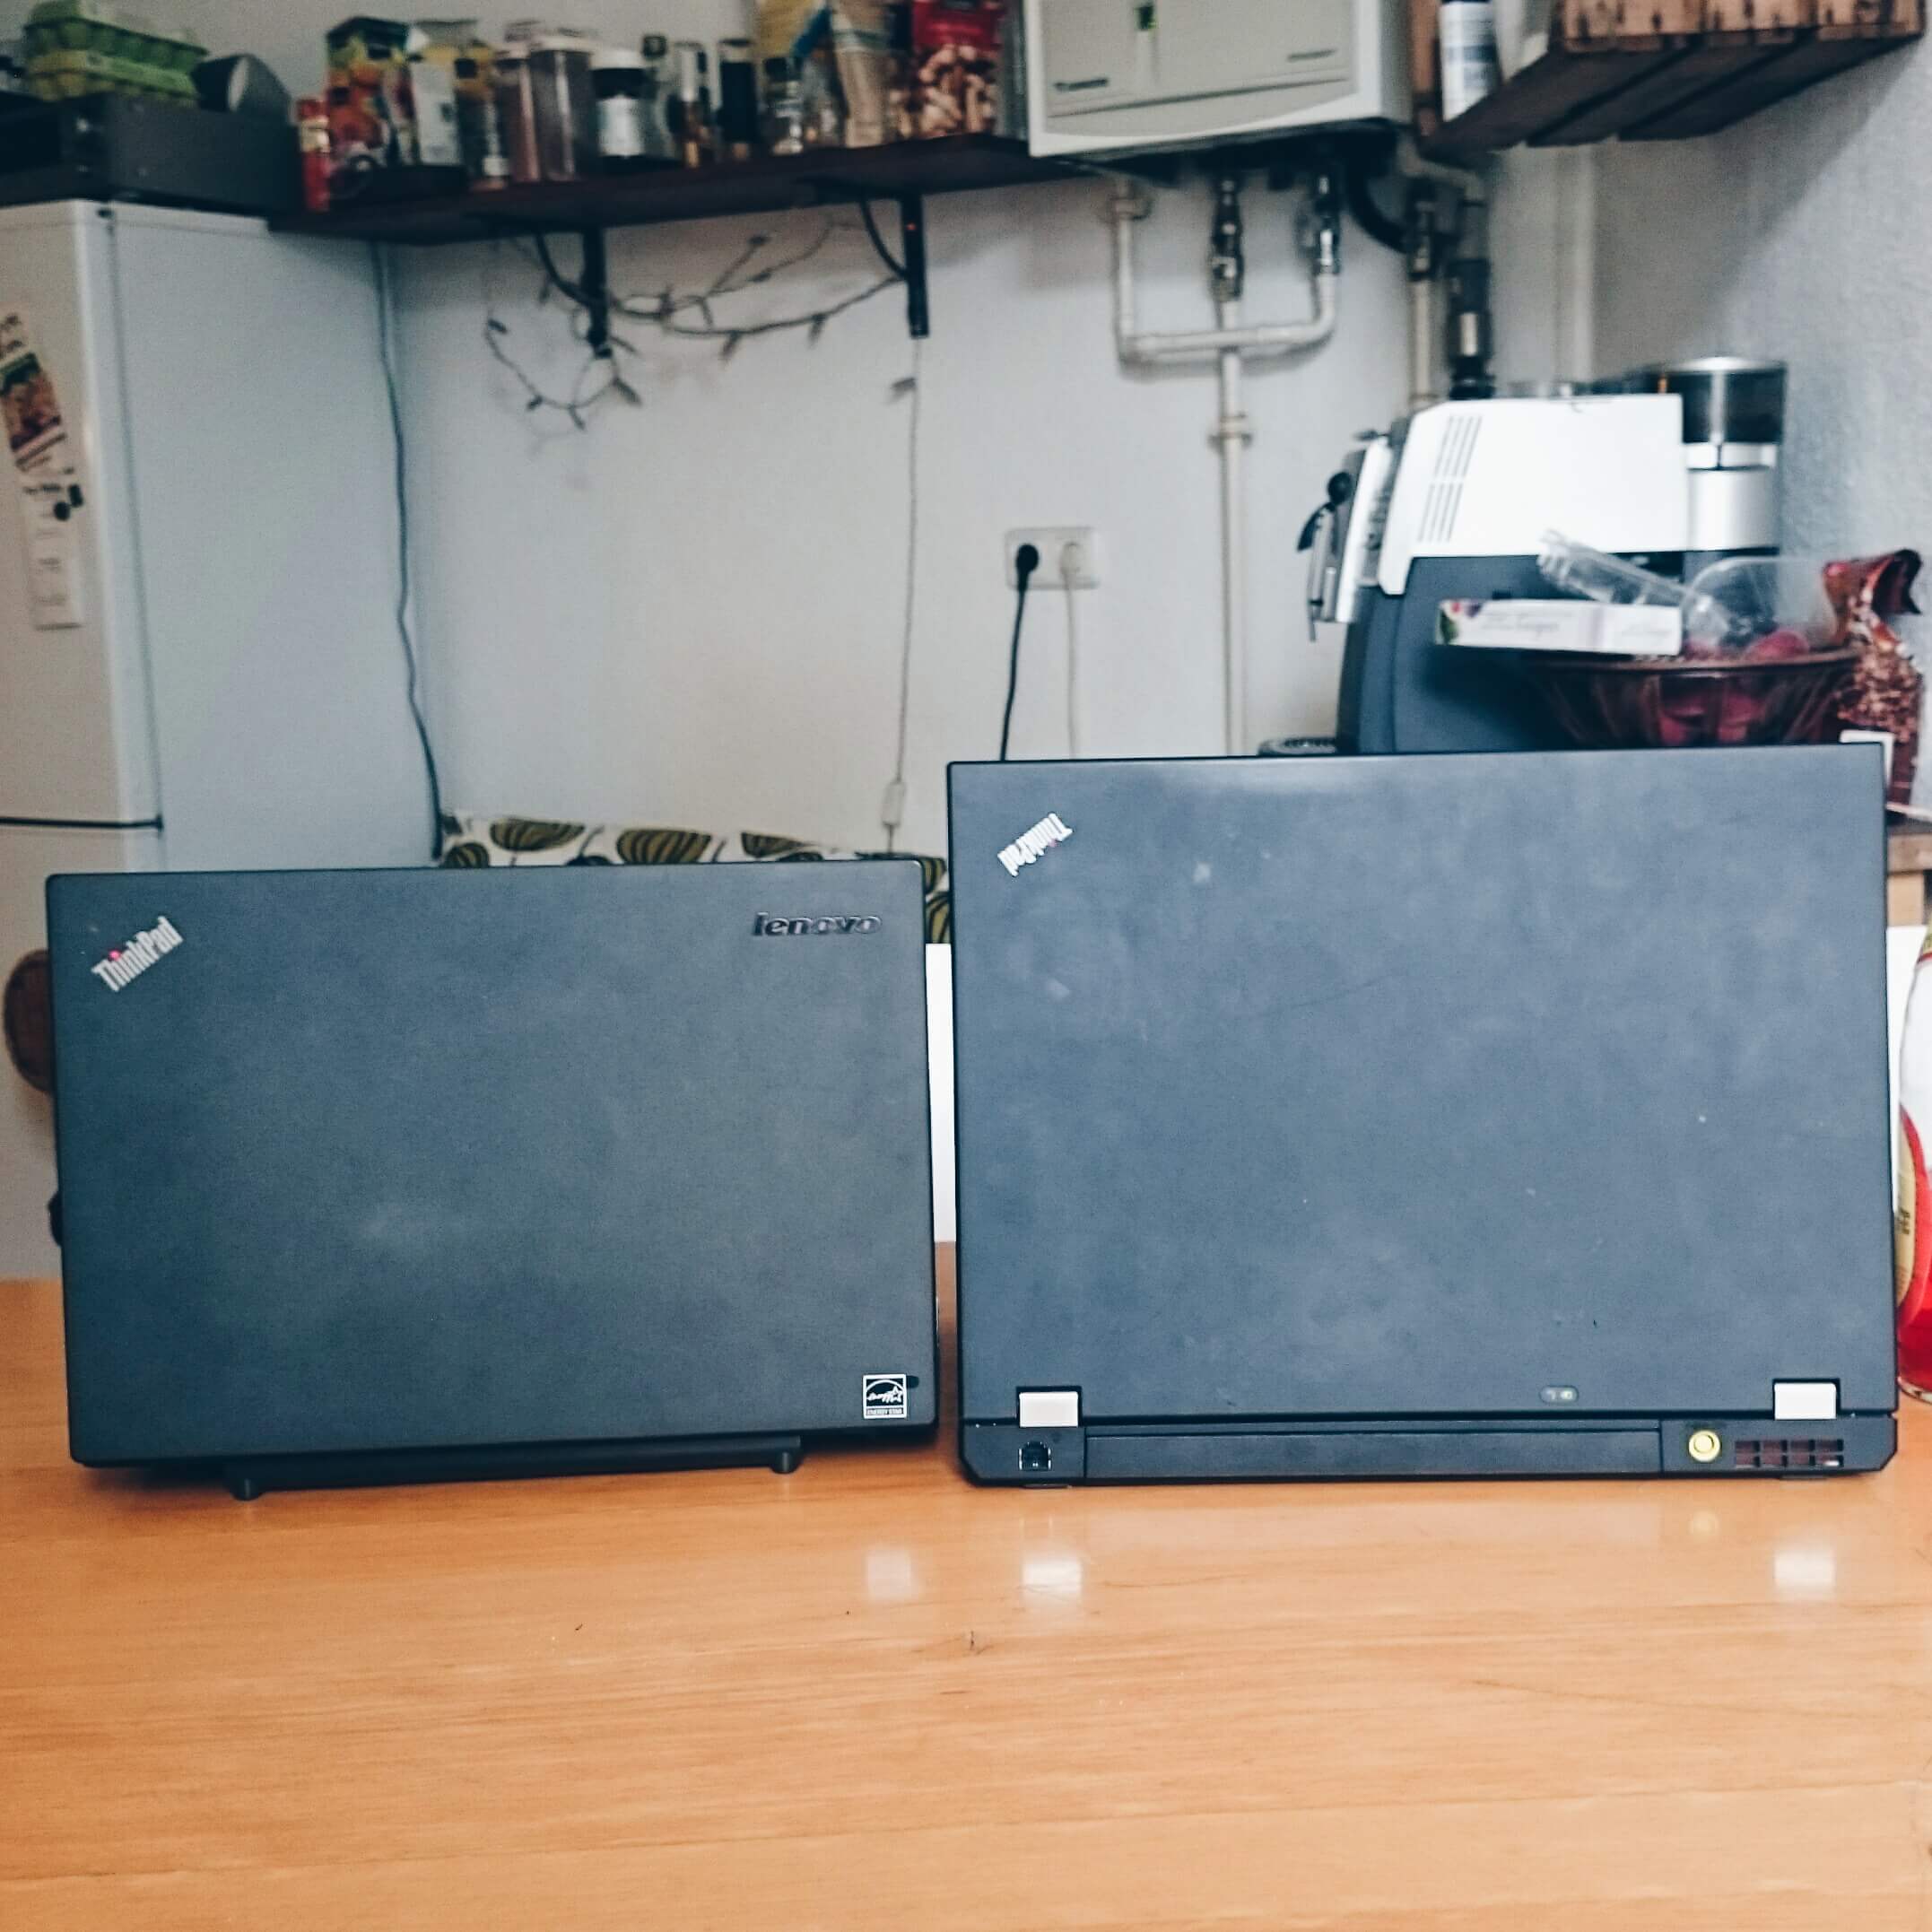 zwei Laptops in Küche